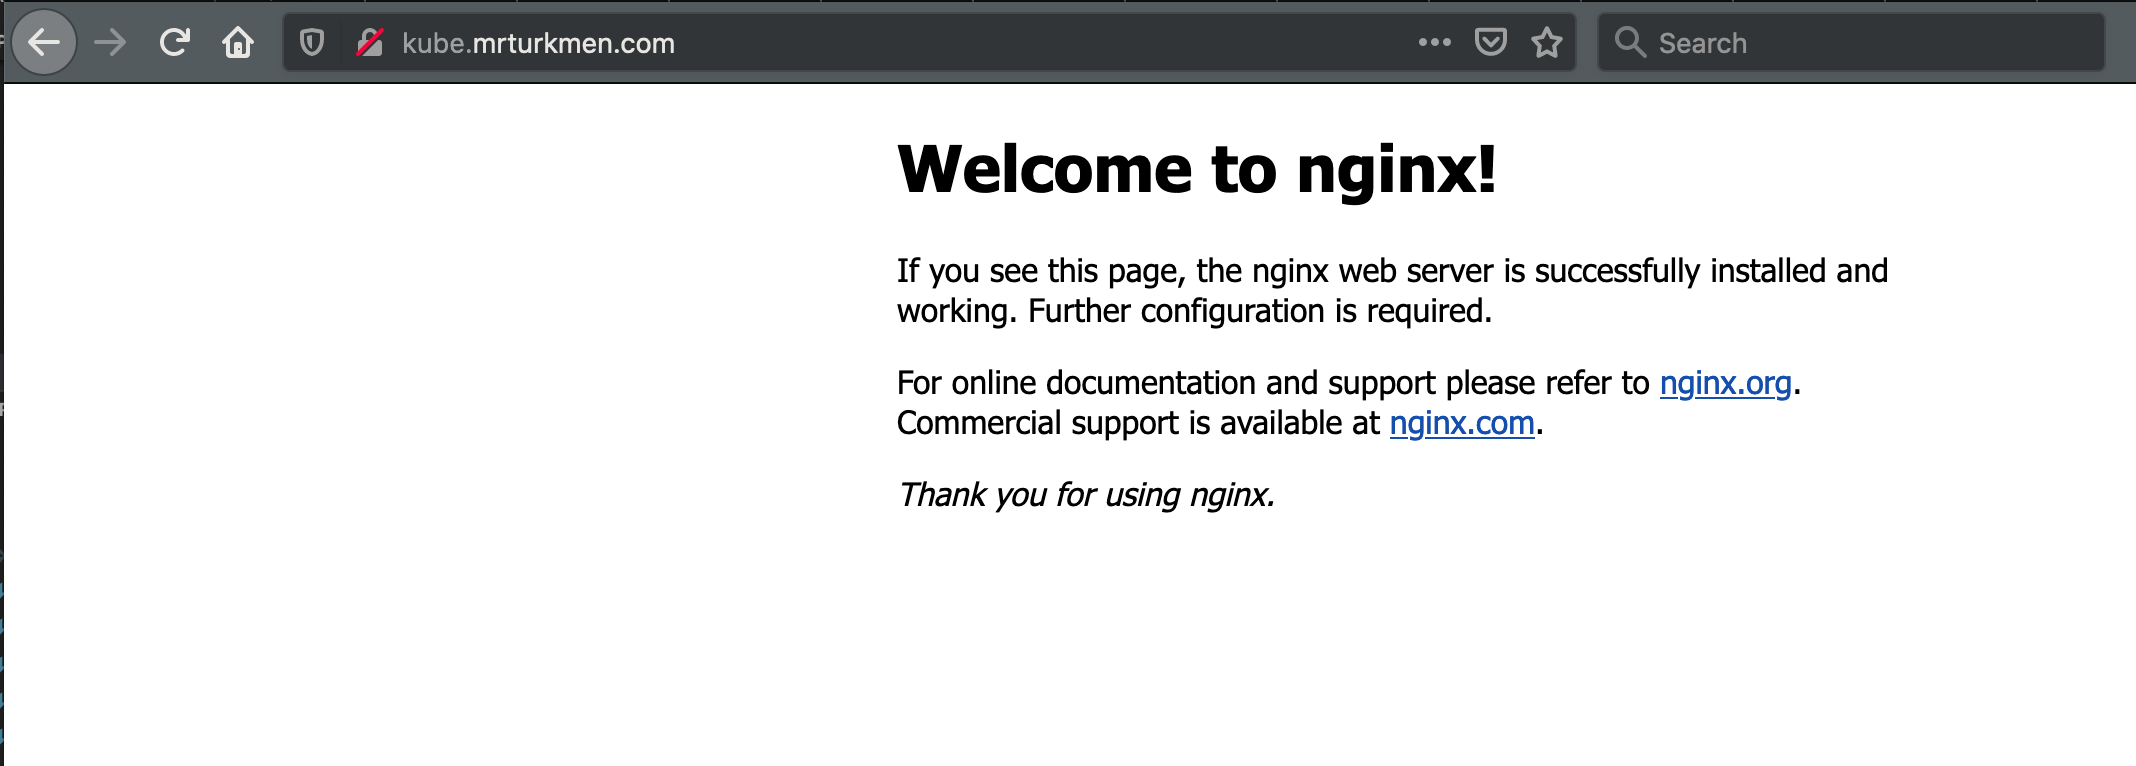 NGINX WEB SERVER DEPLOYMENT RESULT